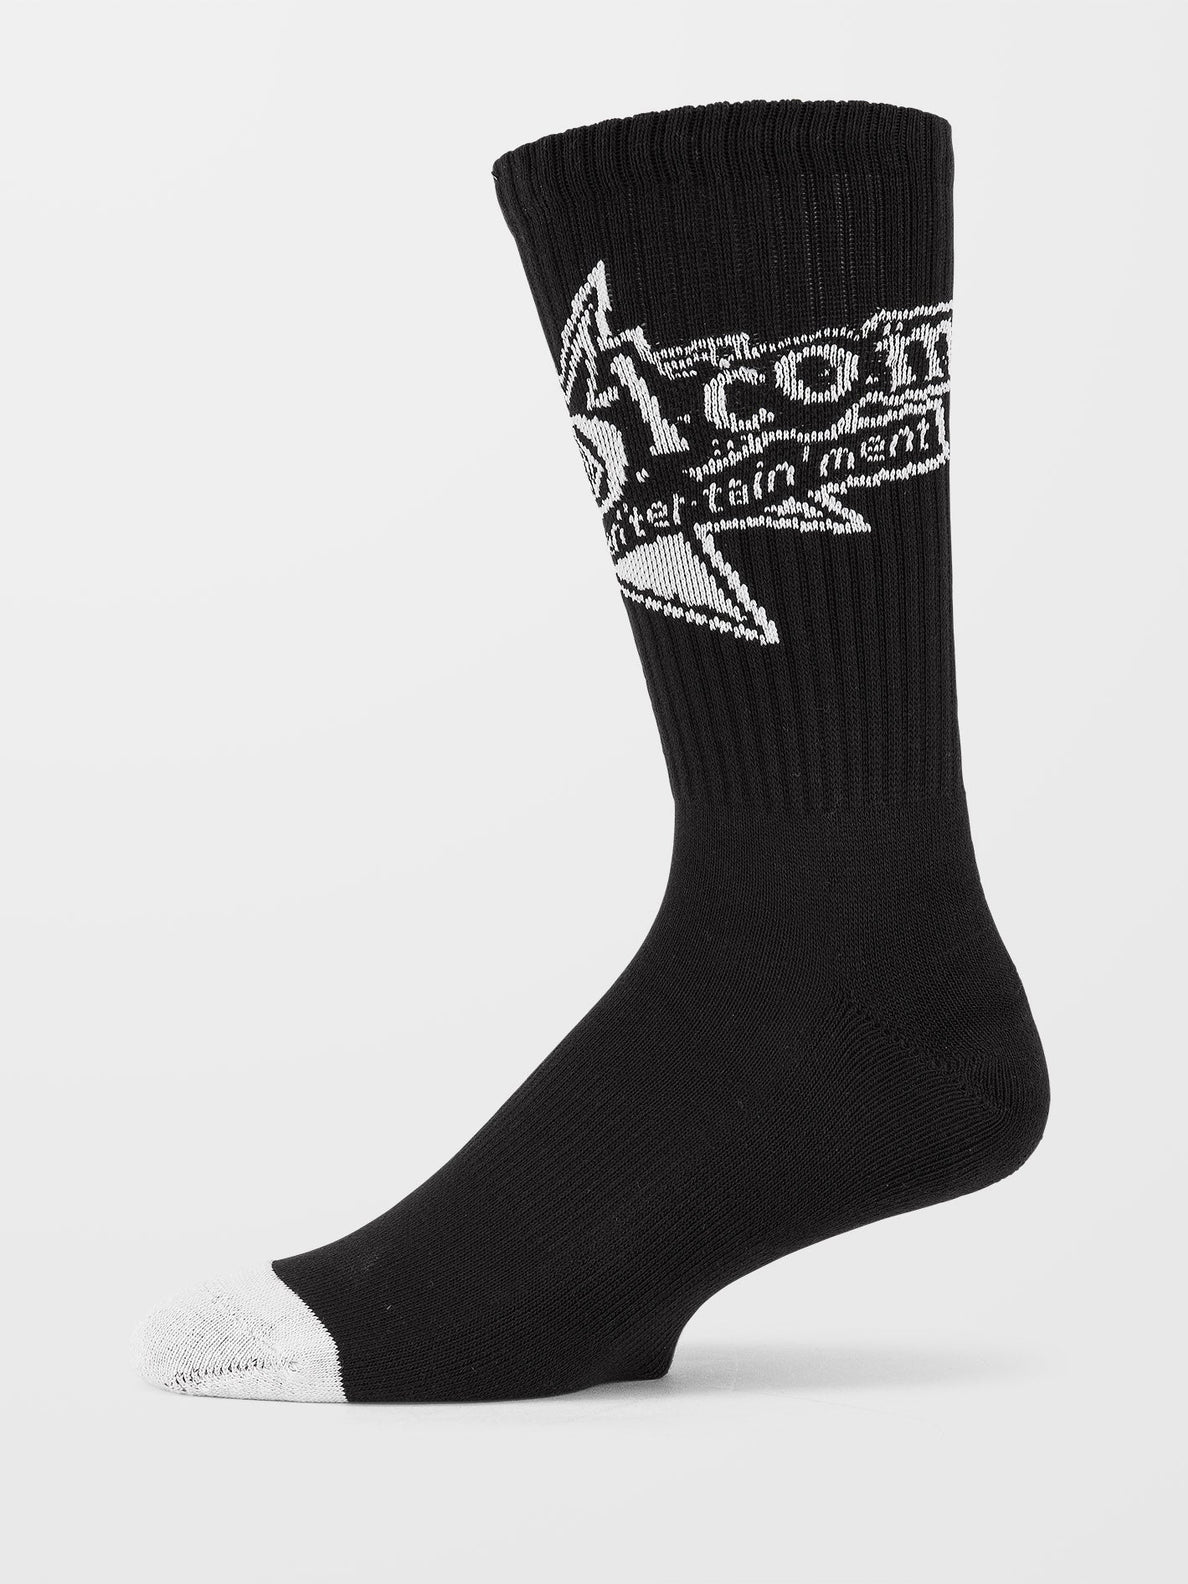 Volcom V Ent Sock Premium Temple Teal | Meistverkaufte Produkte | Neue Produkte | Neueste Produkte | Sammlung_Zalando | Socken | Volcom-Shop | surfdevils.com